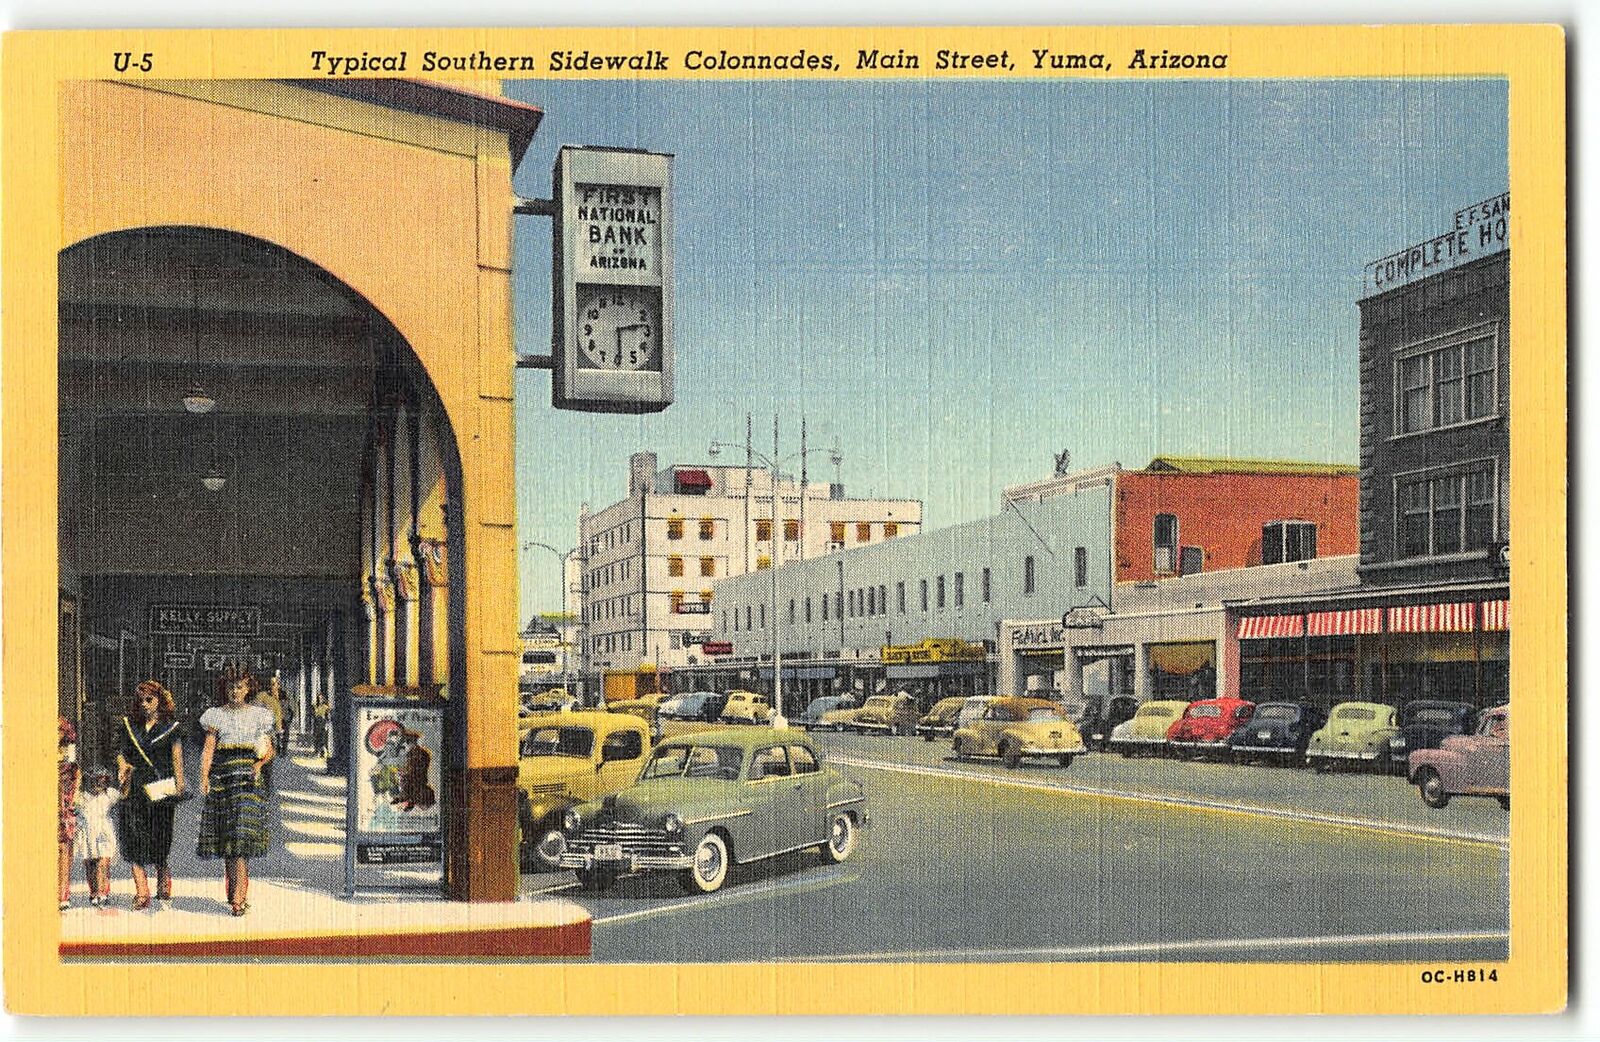 Sidewalk Colonnades (Arches) MAIN ST YUMA AZ - Fabric Shop, Bank - 1950 Postcard